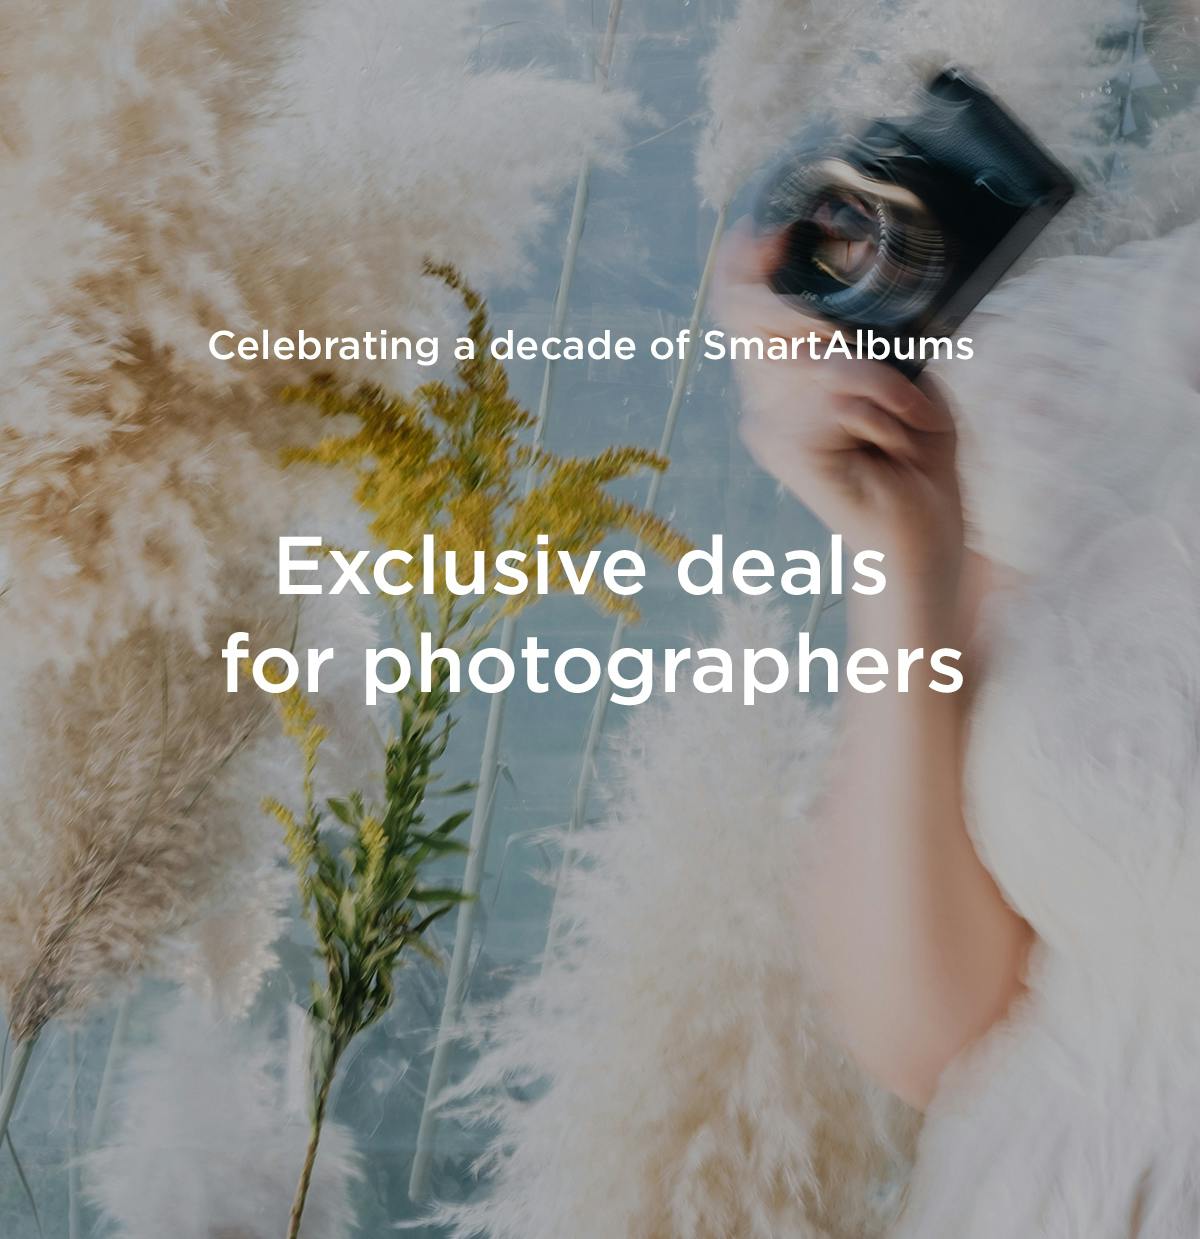 Print deals for photographers